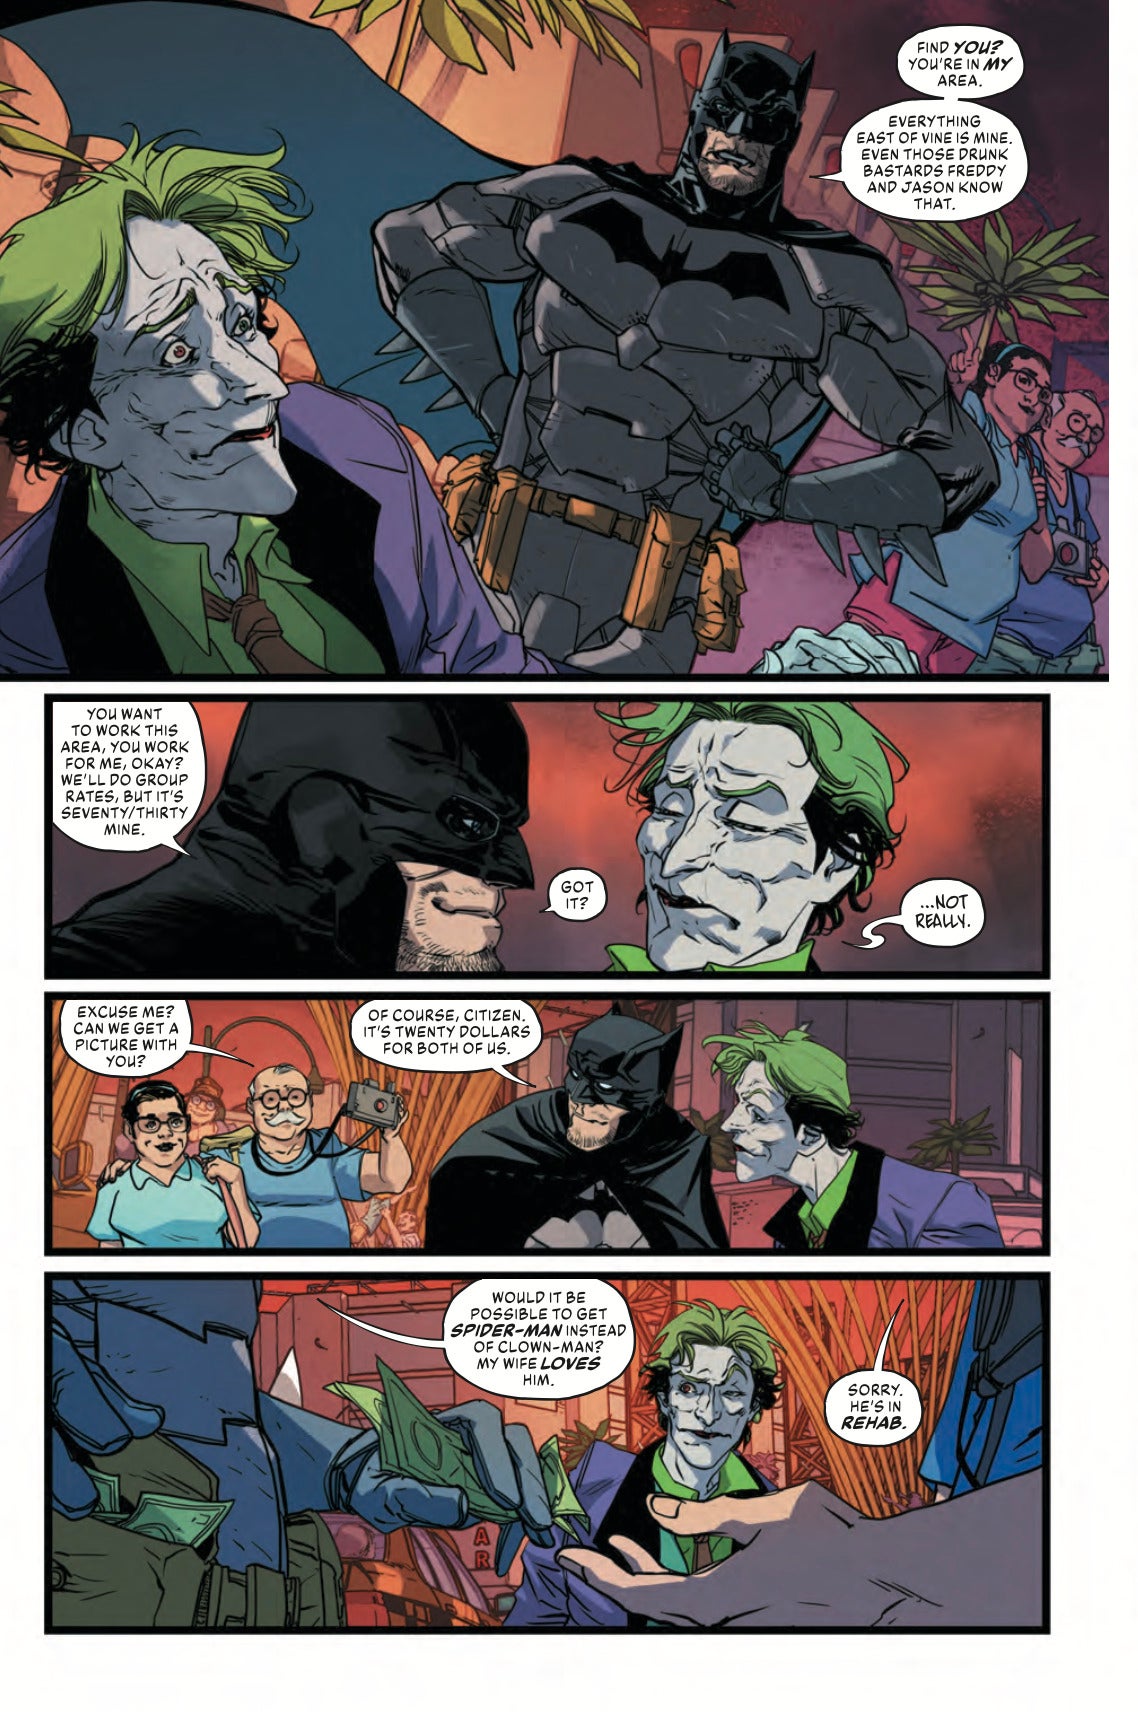 Joker is mistaken for a cosplayer